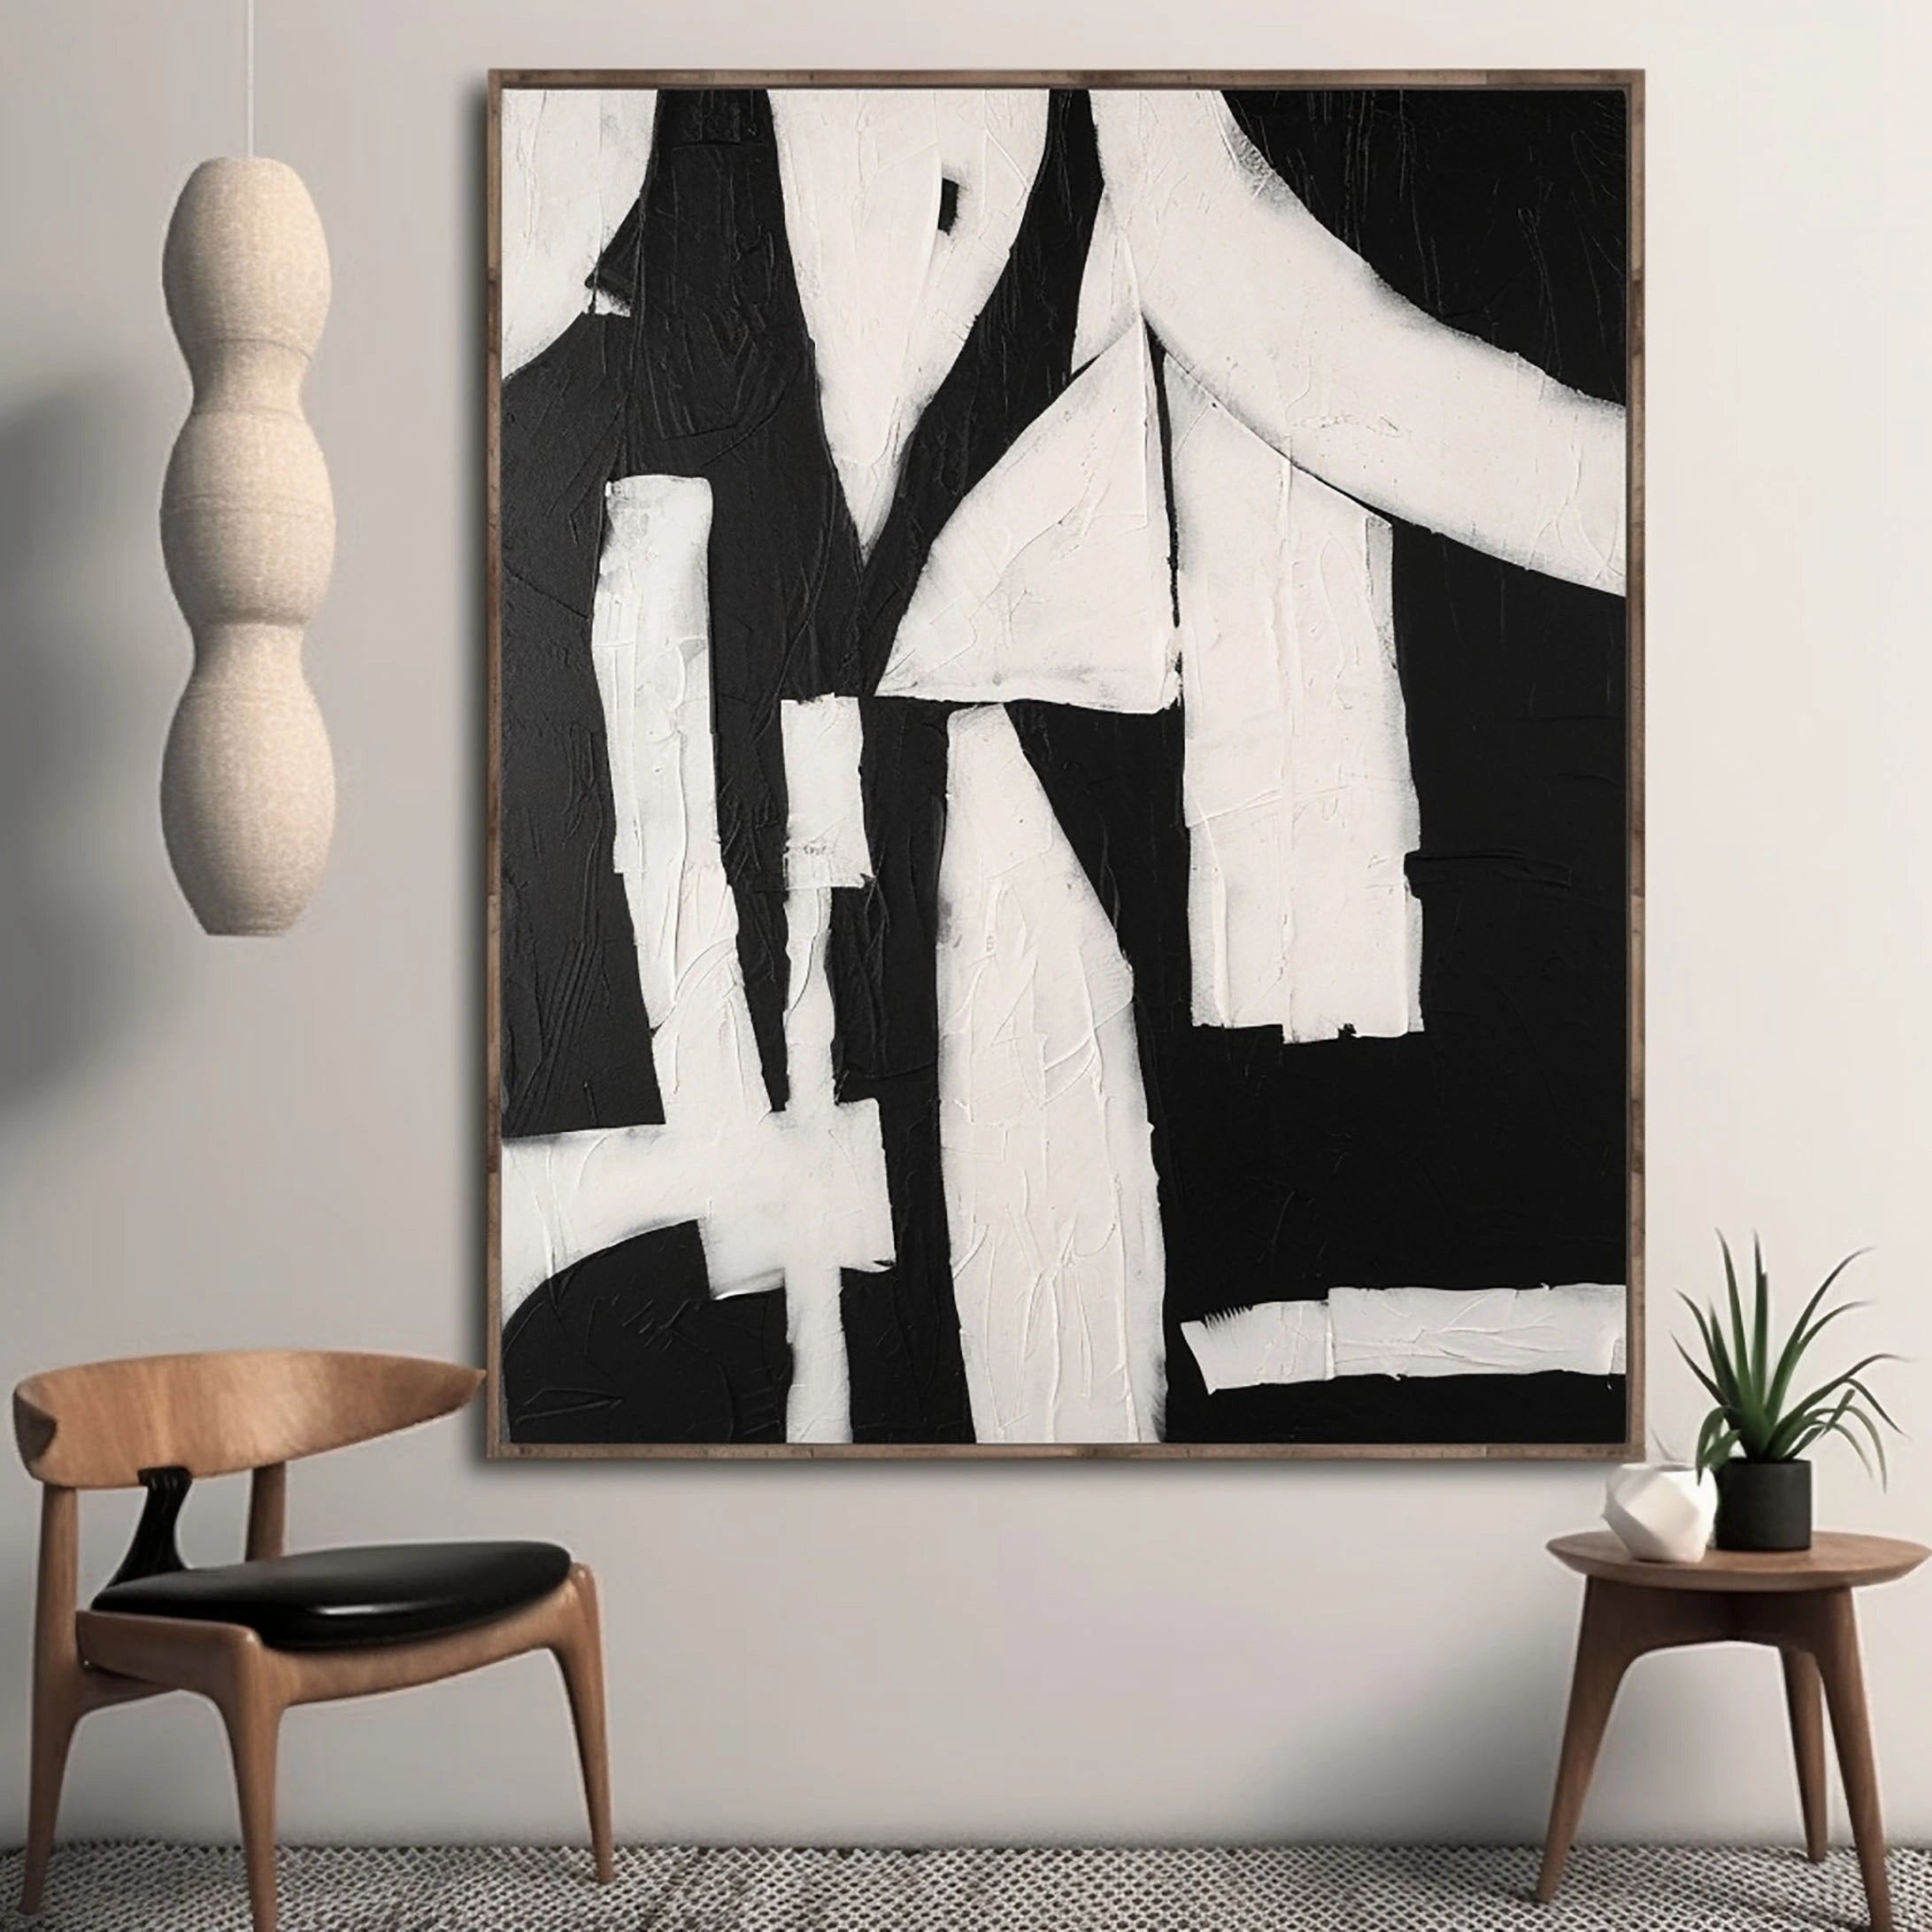 Eleanos Gallery Textured Wabi Sabi Abstract Painting Black Beige for Living Room/Bedroom